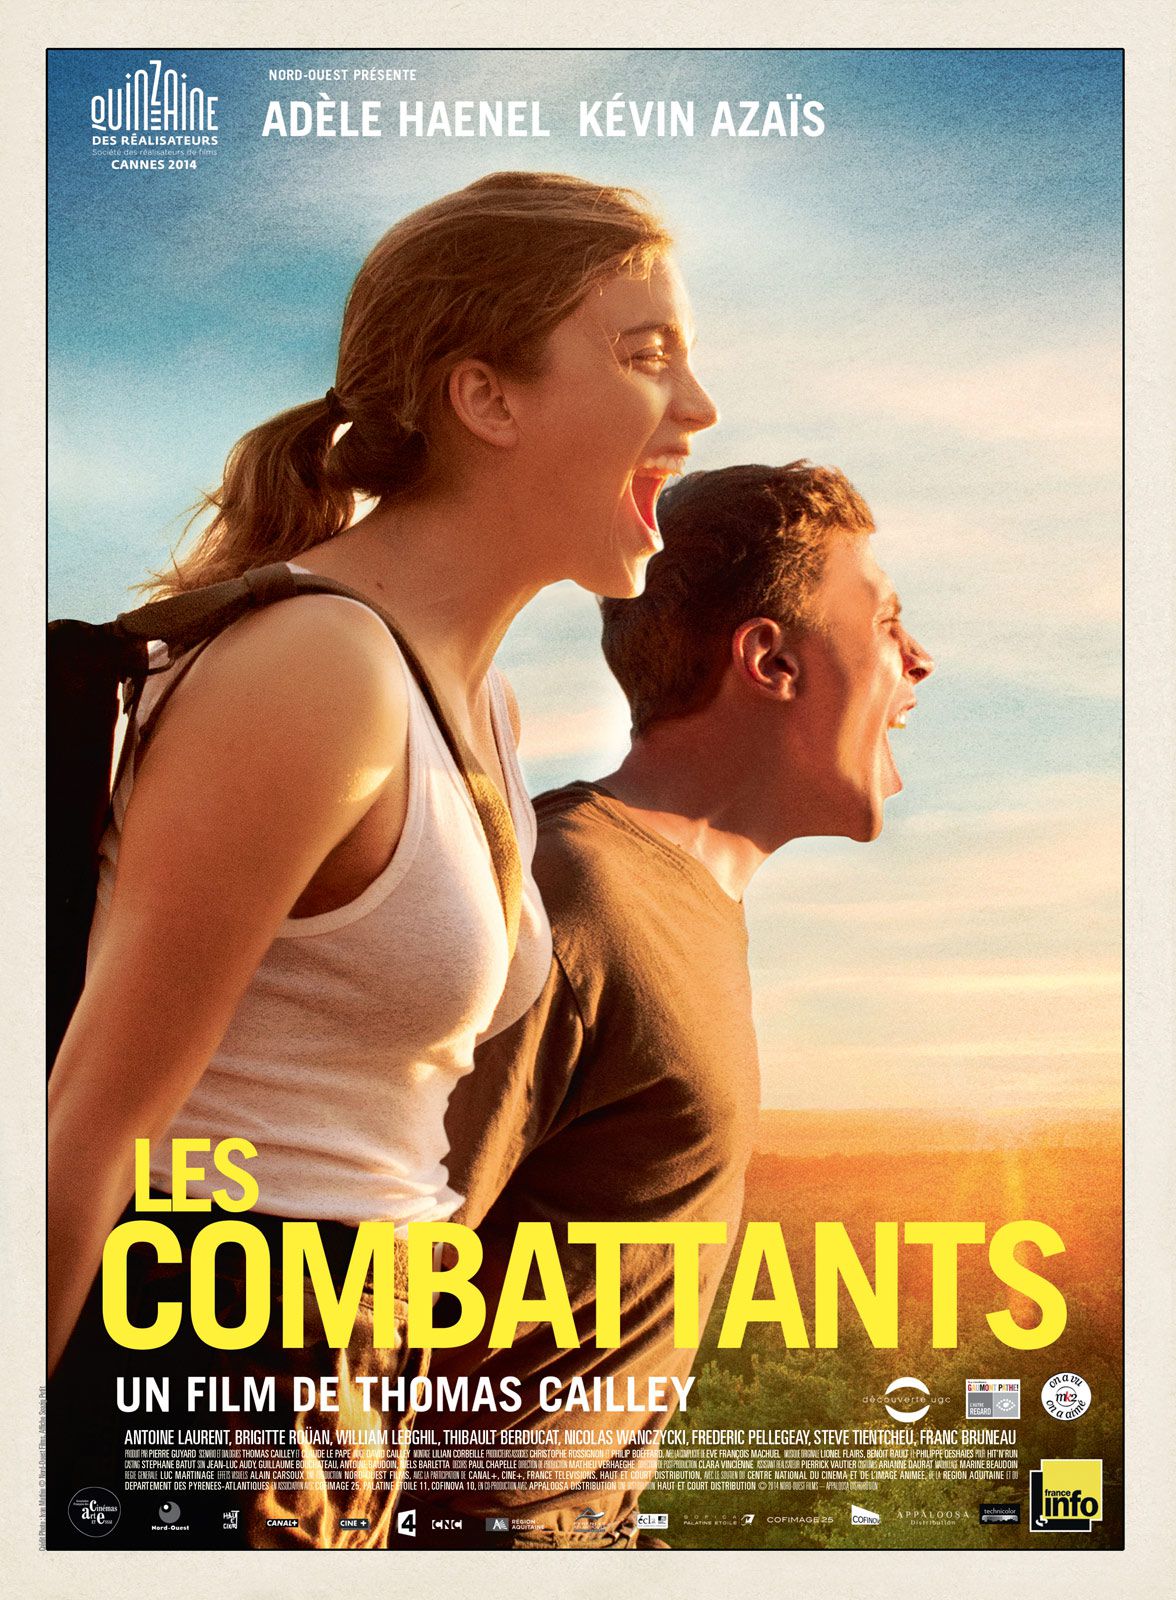 Les Combattants - Film (2014) streaming VF gratuit complet